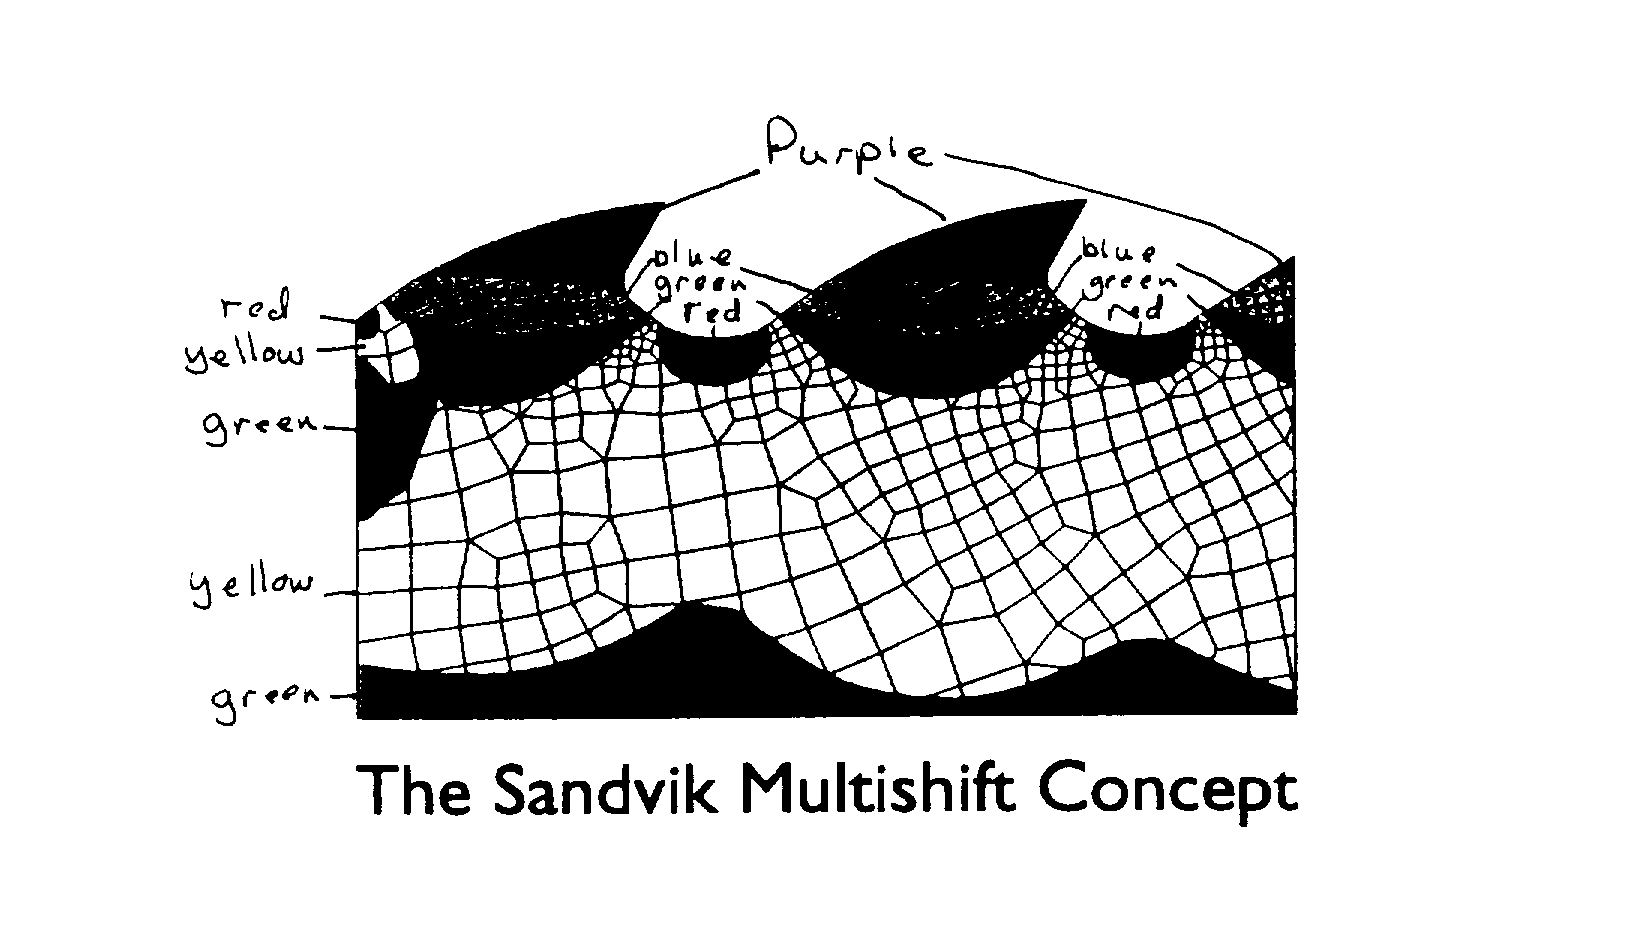  THE SANDVIK MULTISHIFT CONCEPT